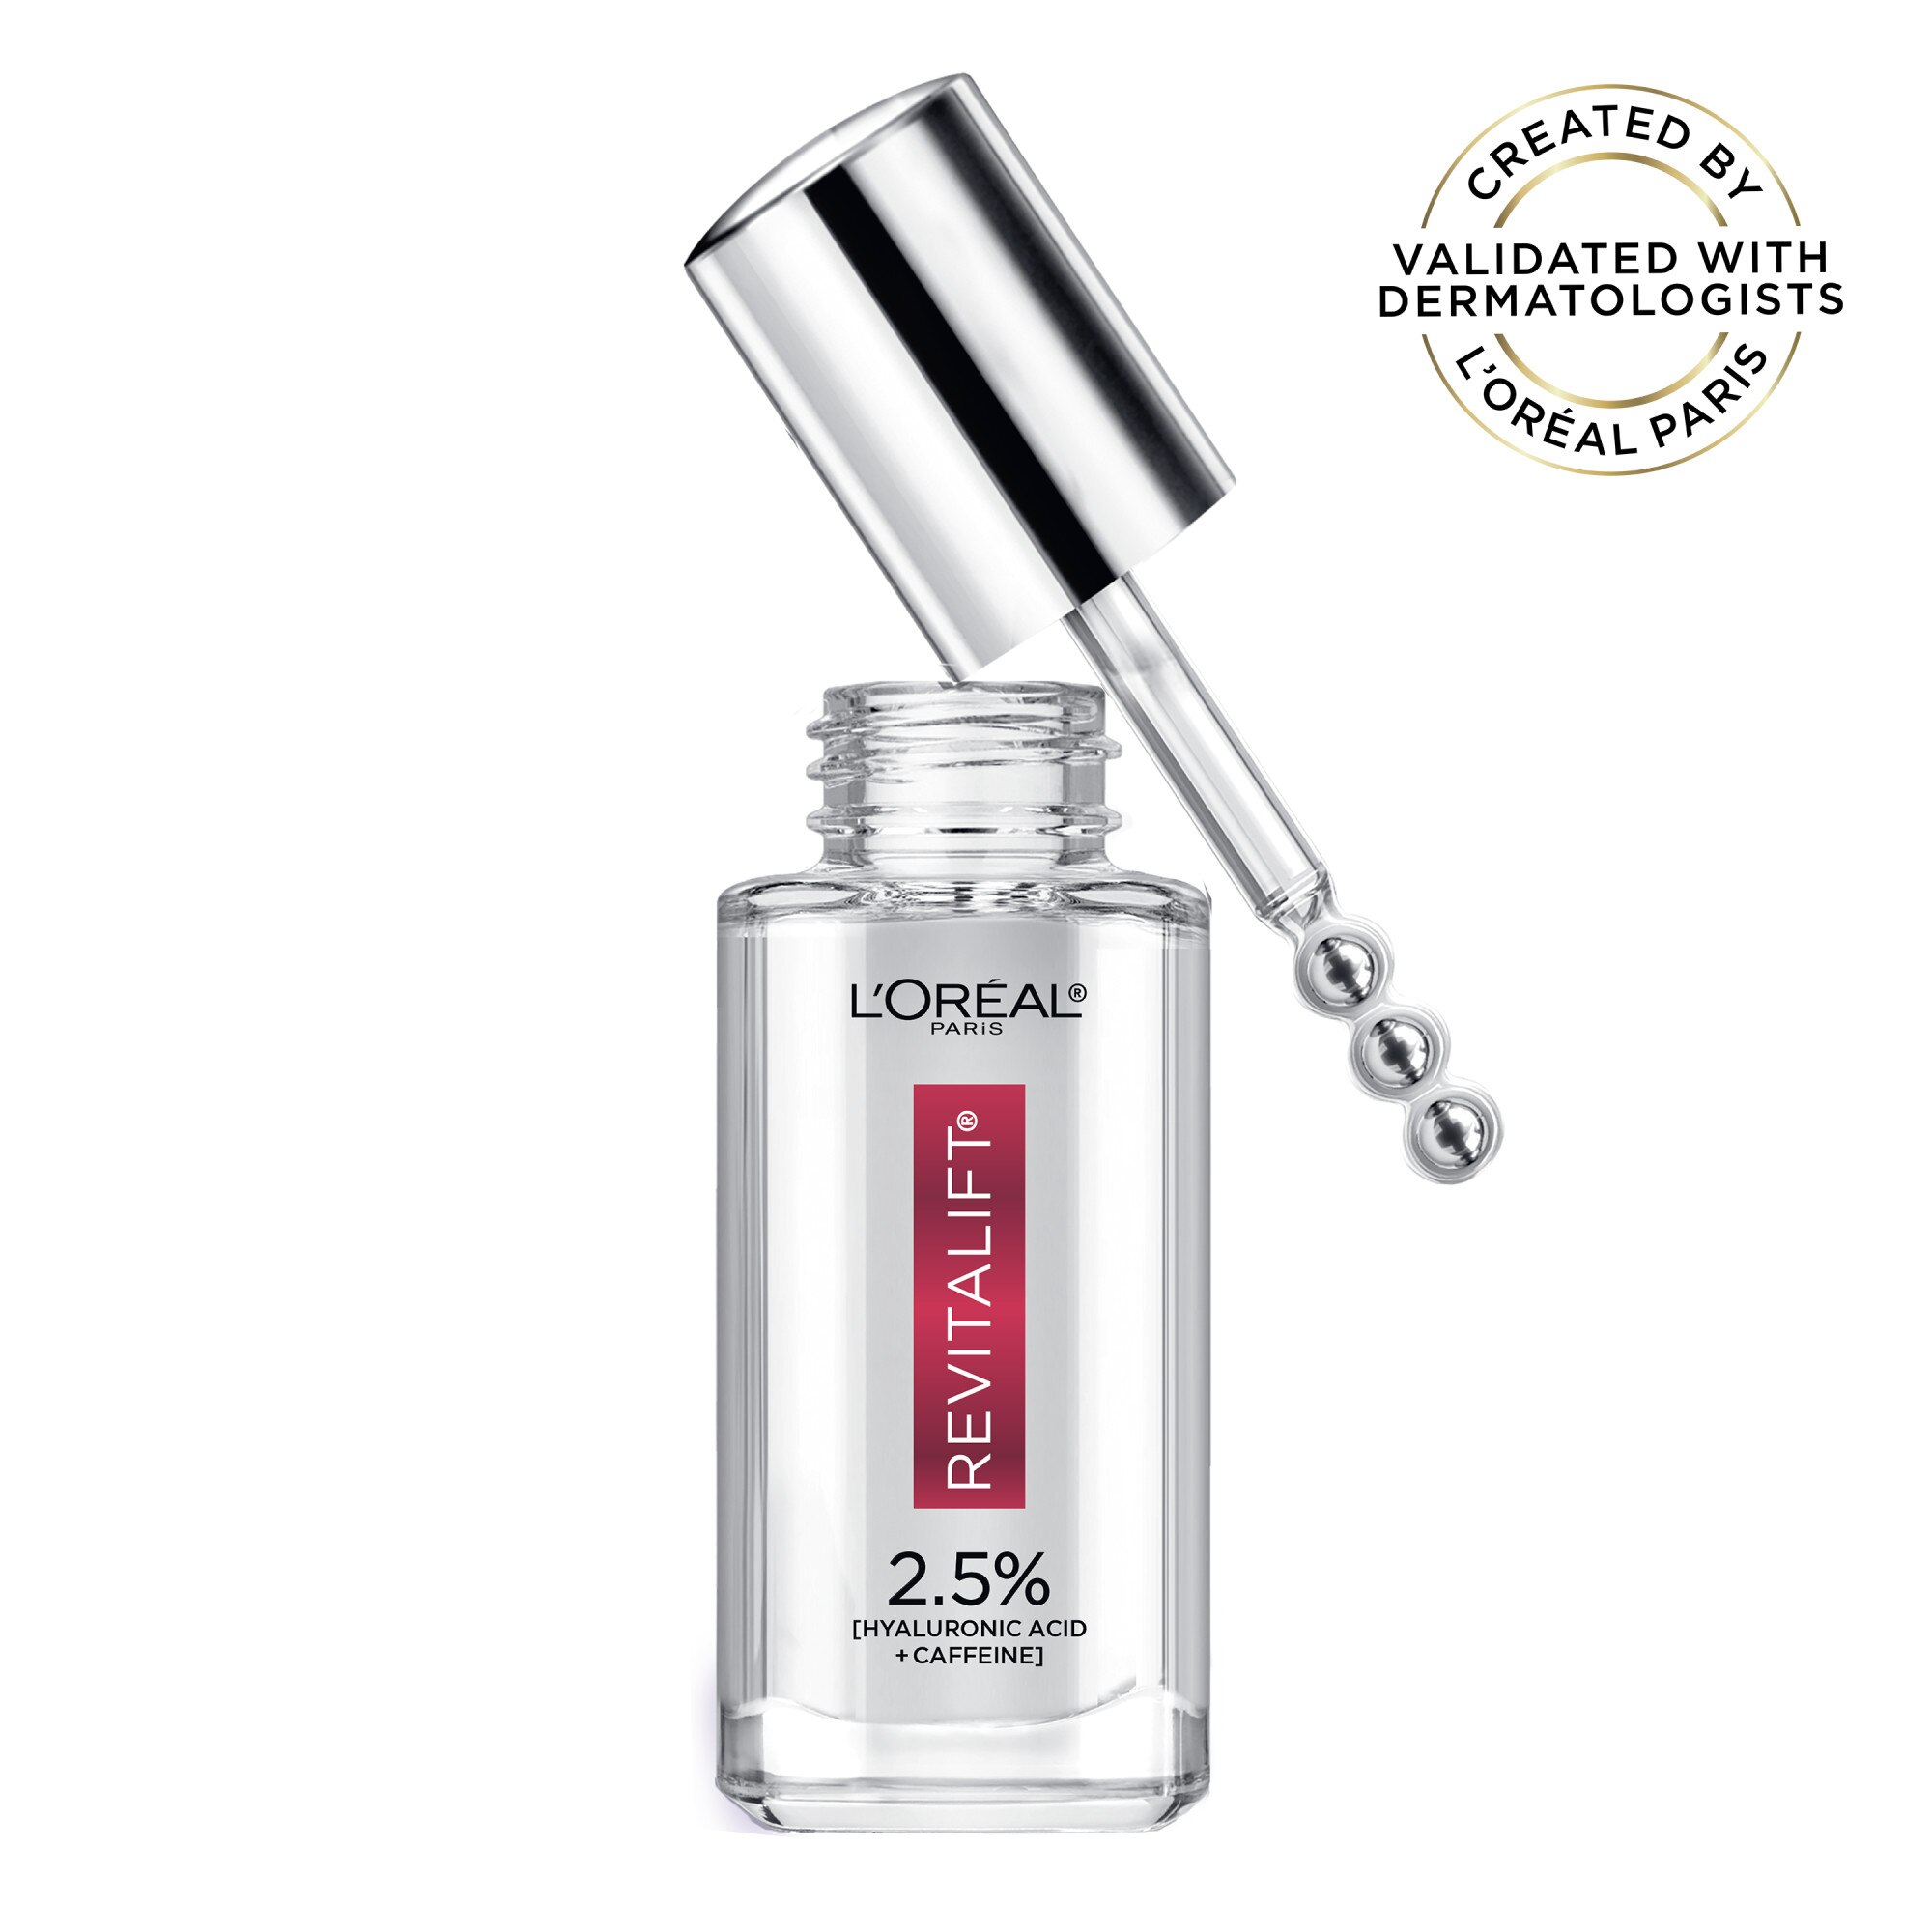 L'Oreal Paris Revitalift Derm Intensives 2.5% Hyaluronic Acid + Caffeine Eye Serum, 0.67 OZ | Pick Up In Store TODAY at CVS